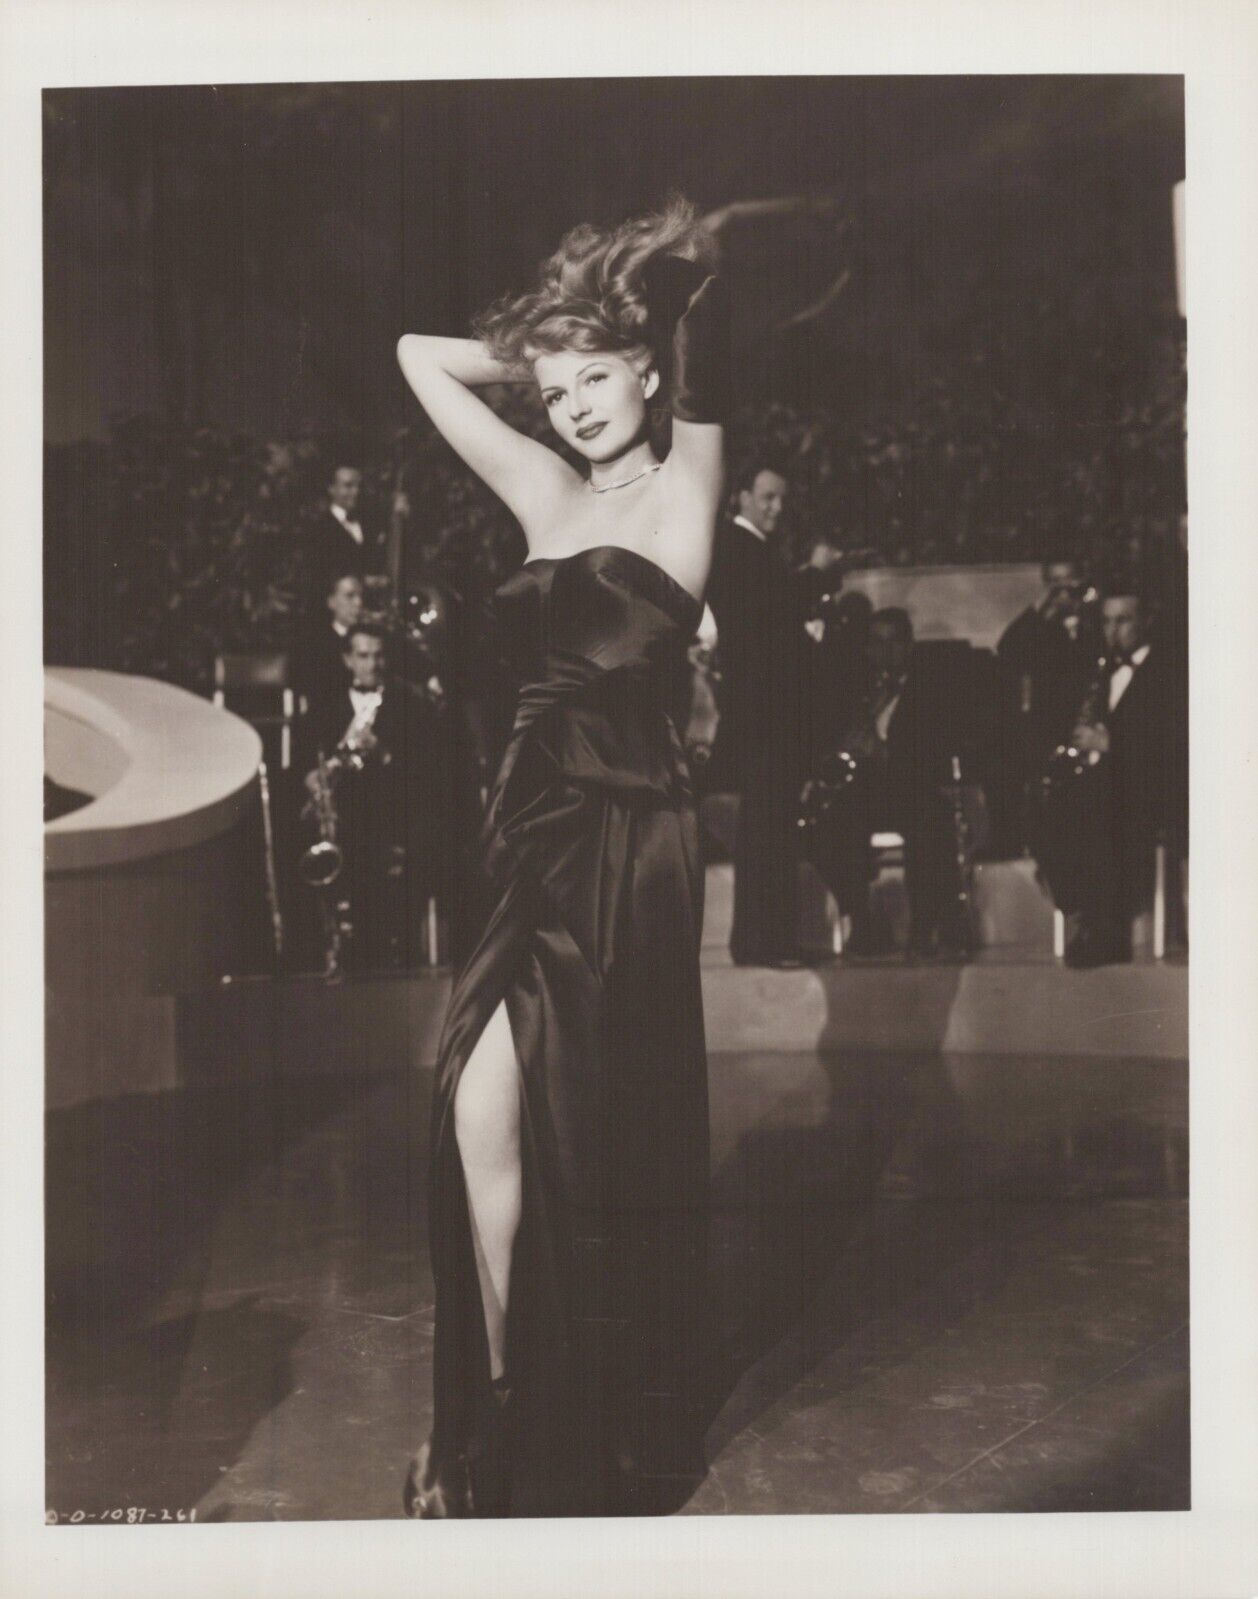 Rita Hayworth in Gilda (1950s)❤ Hollywood Beauty - Stylish Glamorous Photo K 396